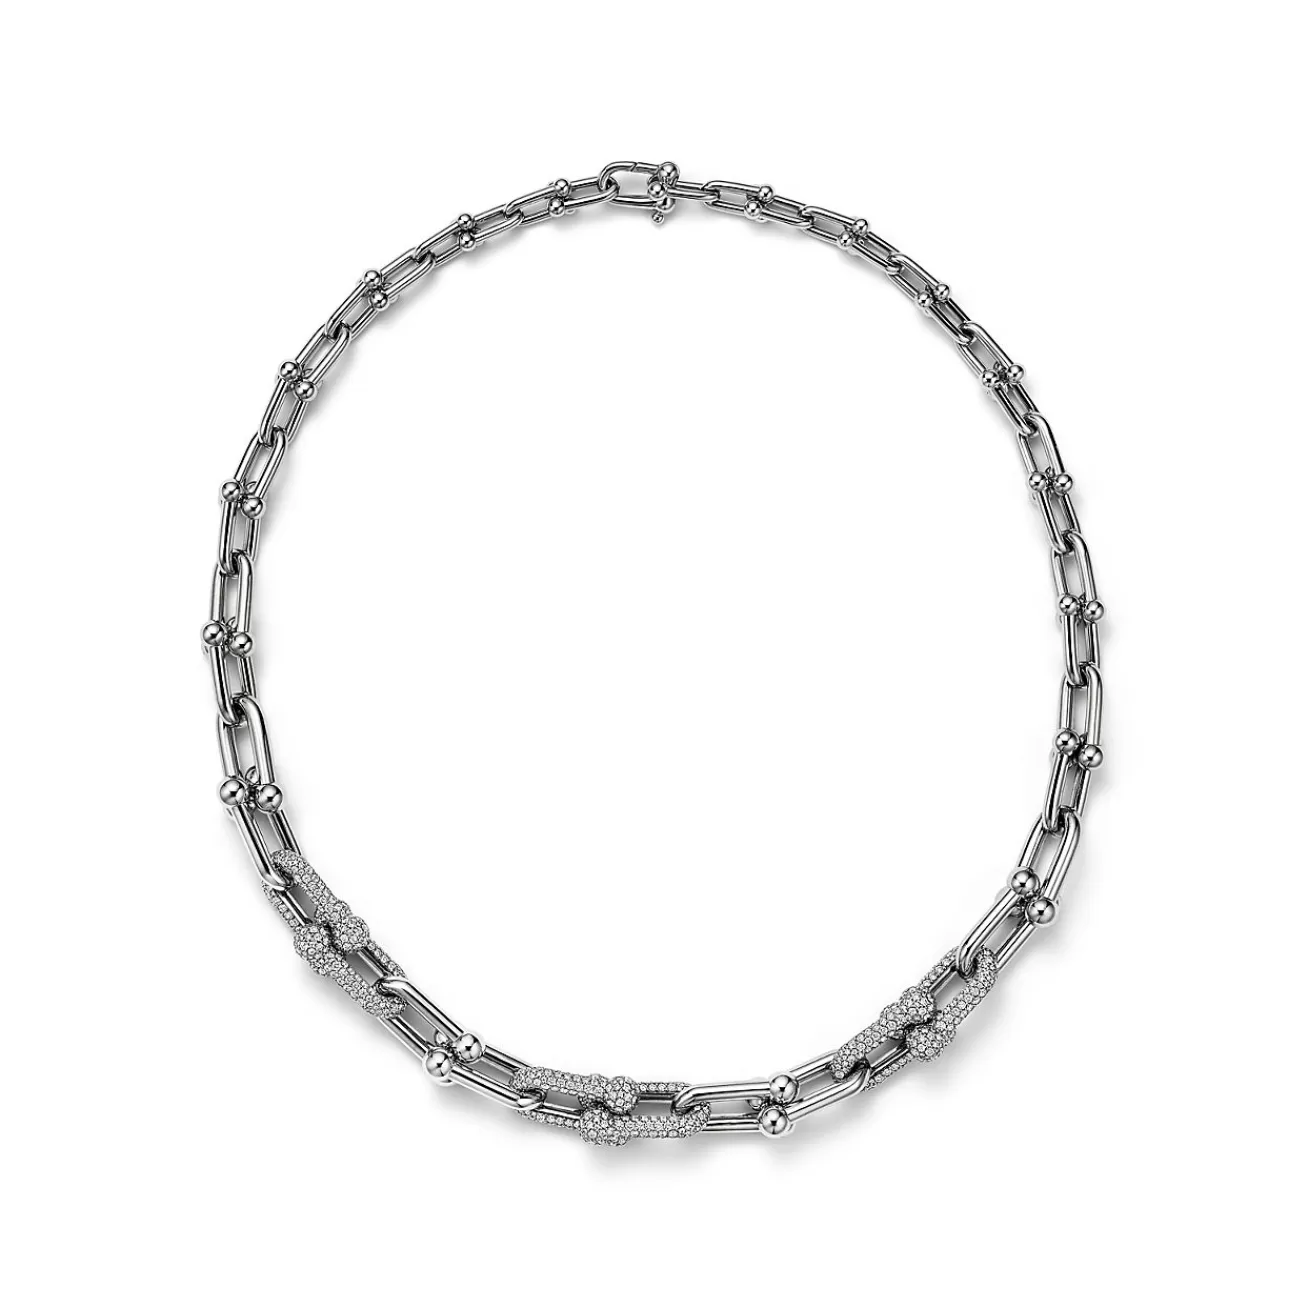 Tiffany & Co. Tiffany HardWear Graduated Link Necklace in White Gold with Pavé Diamonds | ^ Necklaces & Pendants | Diamond Jewelry